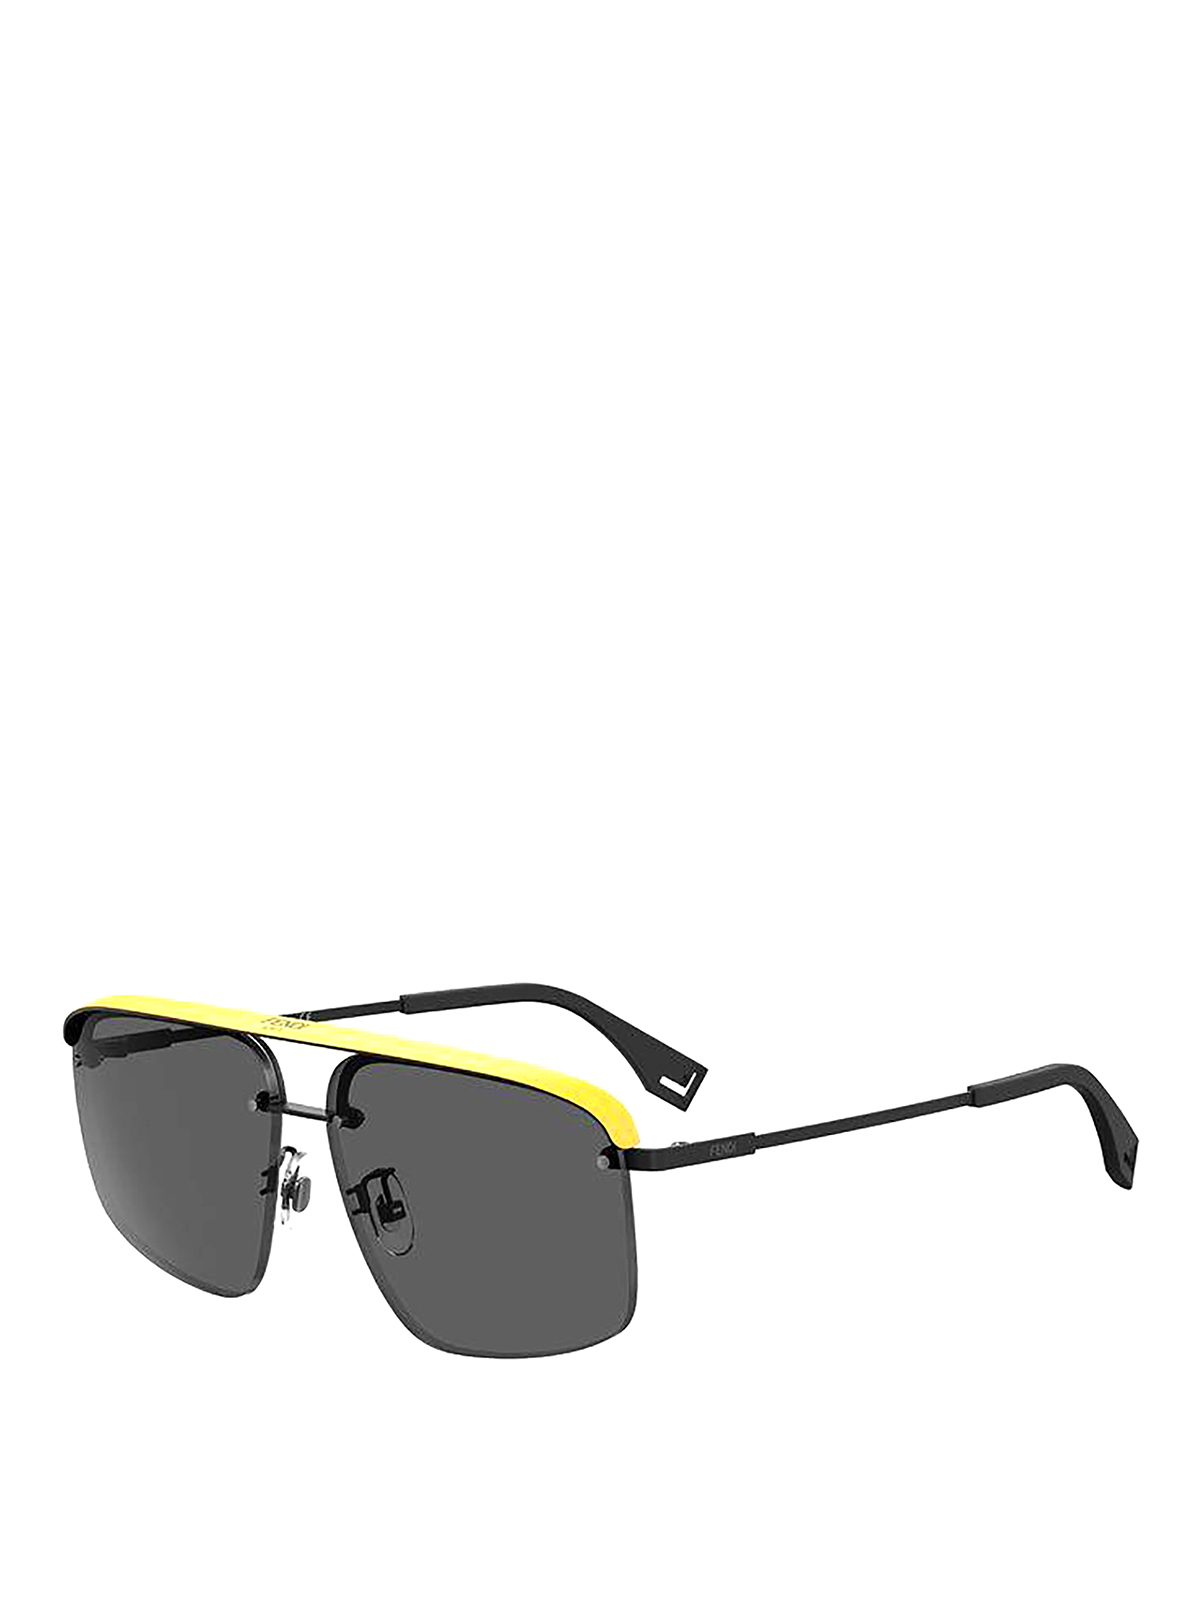 Fendi Pack Sunglasses In Black